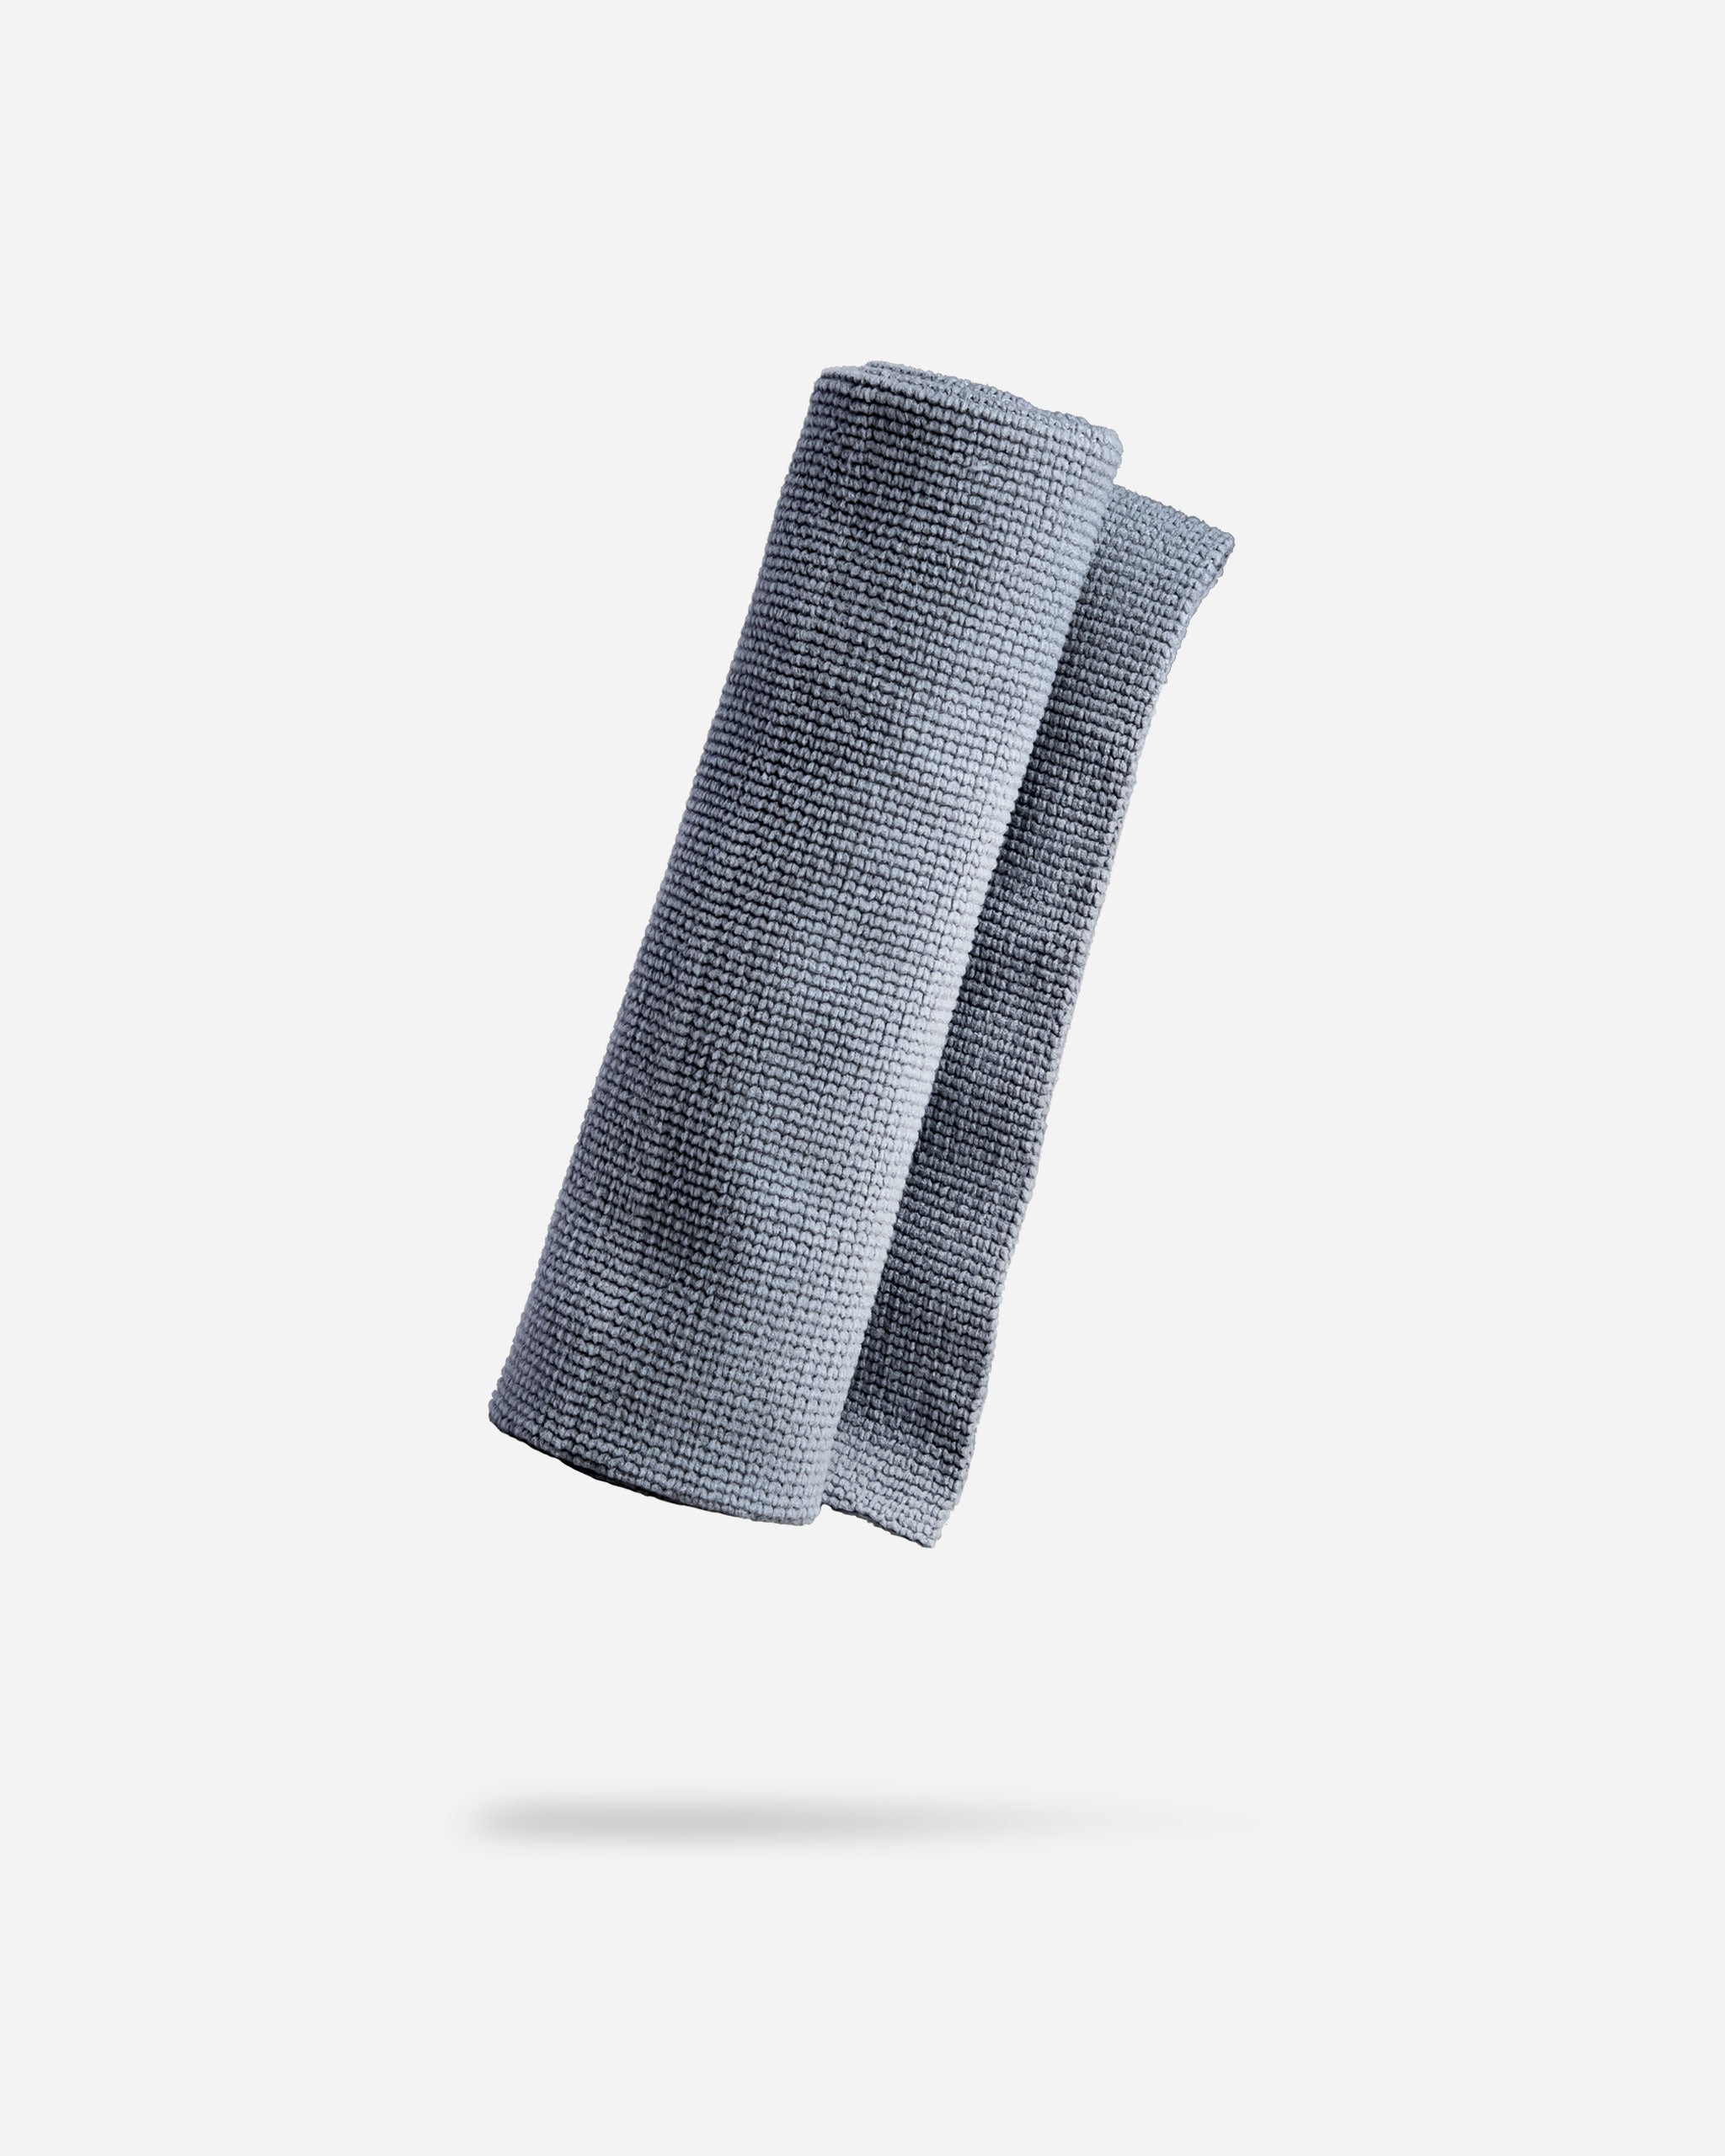 Adam's Single Soft Microfiber Towel - Soft Enough for Even The Most Delicate Fin